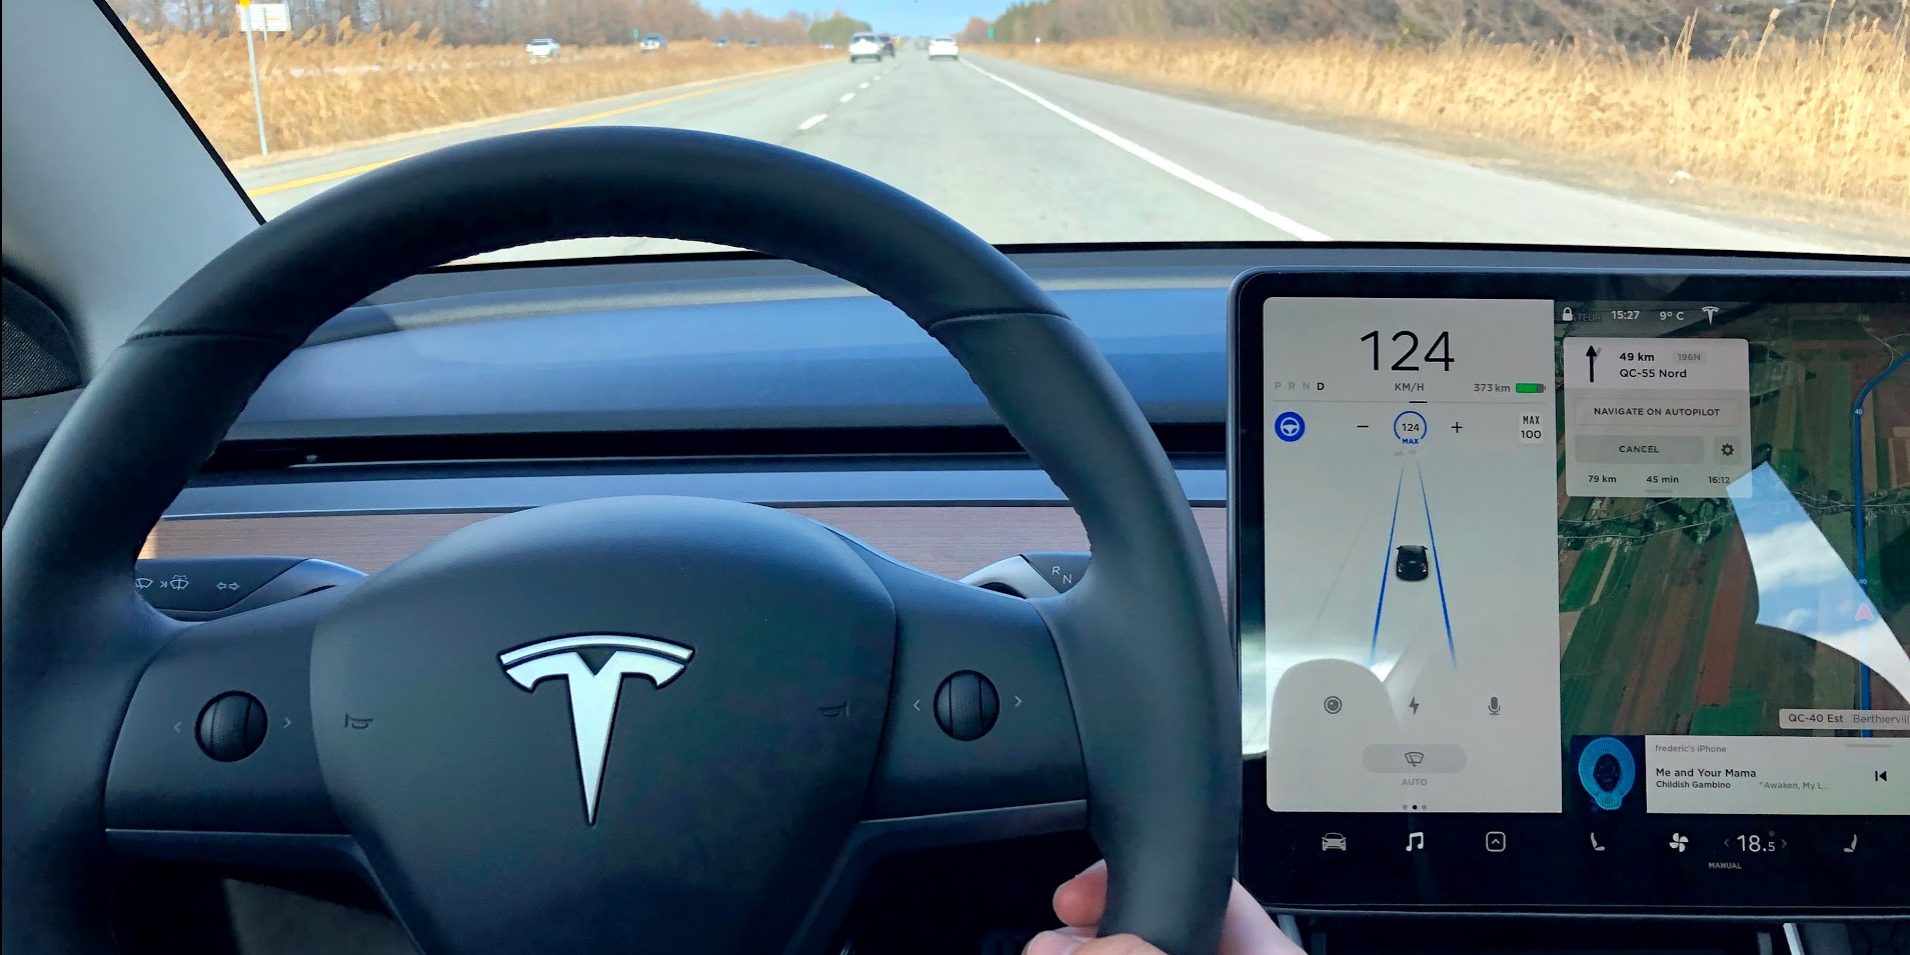 Tesla Autopilot will be able to avoid potholes on the road, says Elon